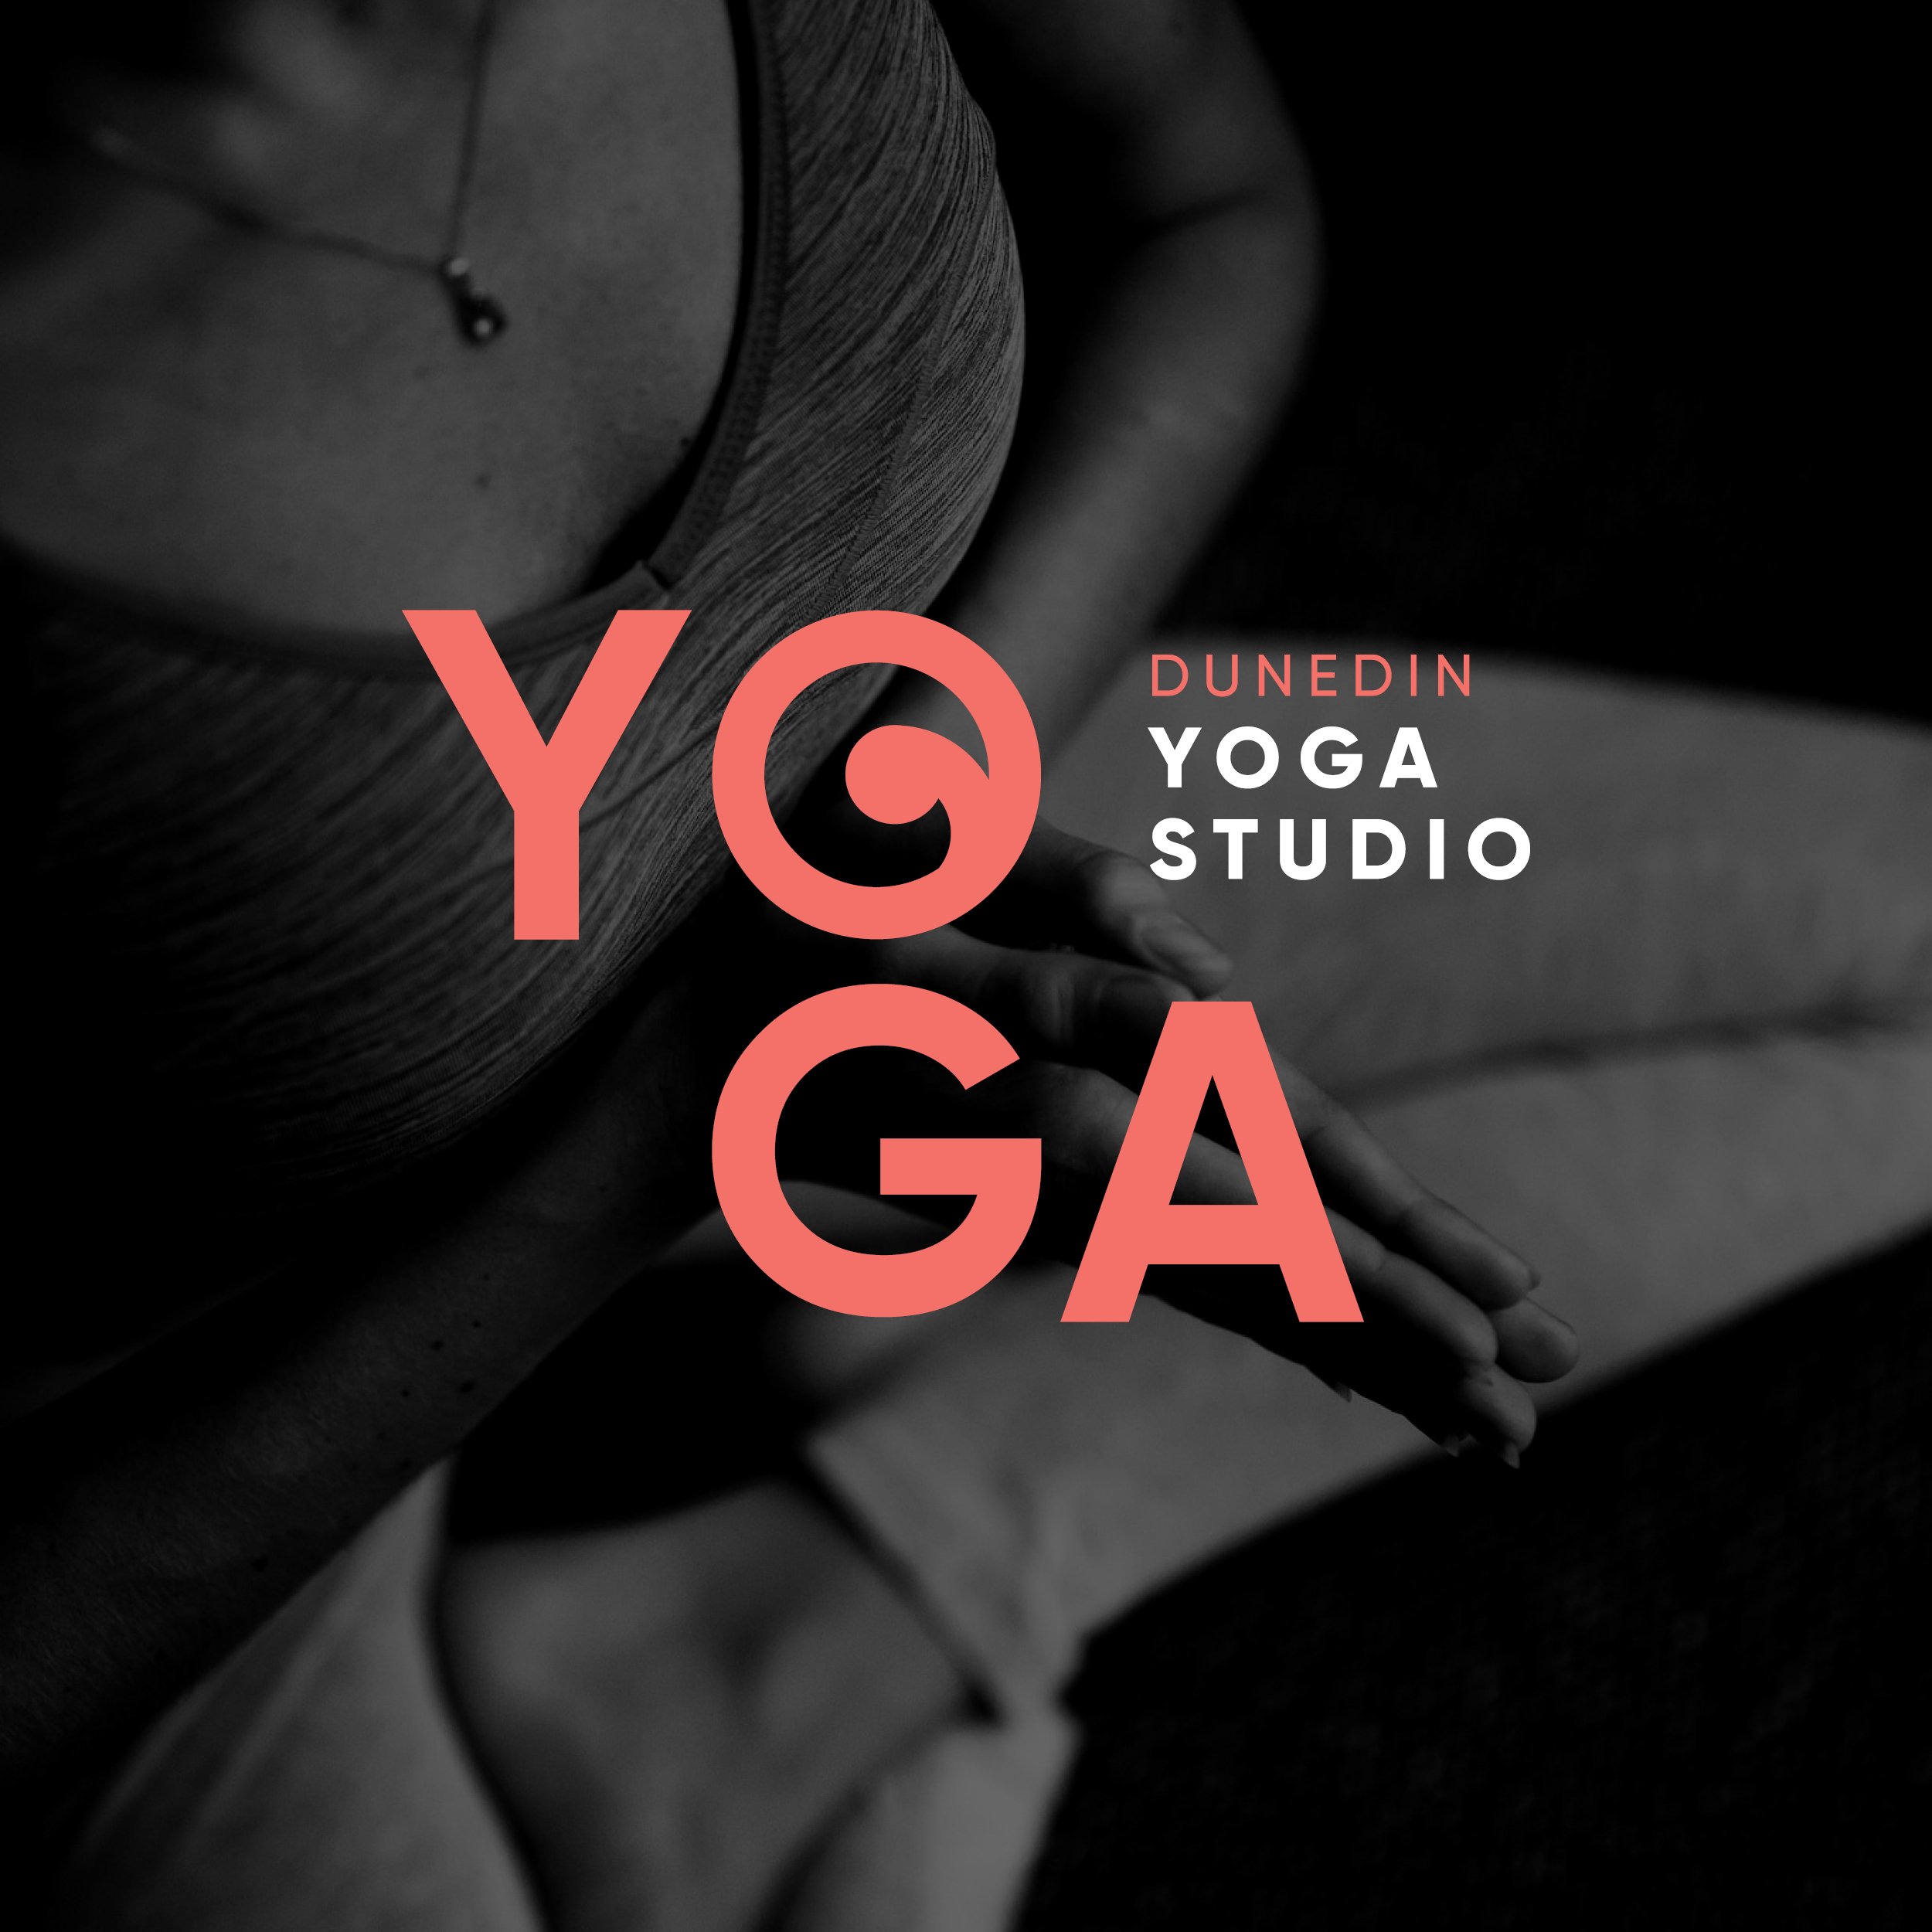 Dunedin Yoga Studio - Social (brand presentation) 2.jpg